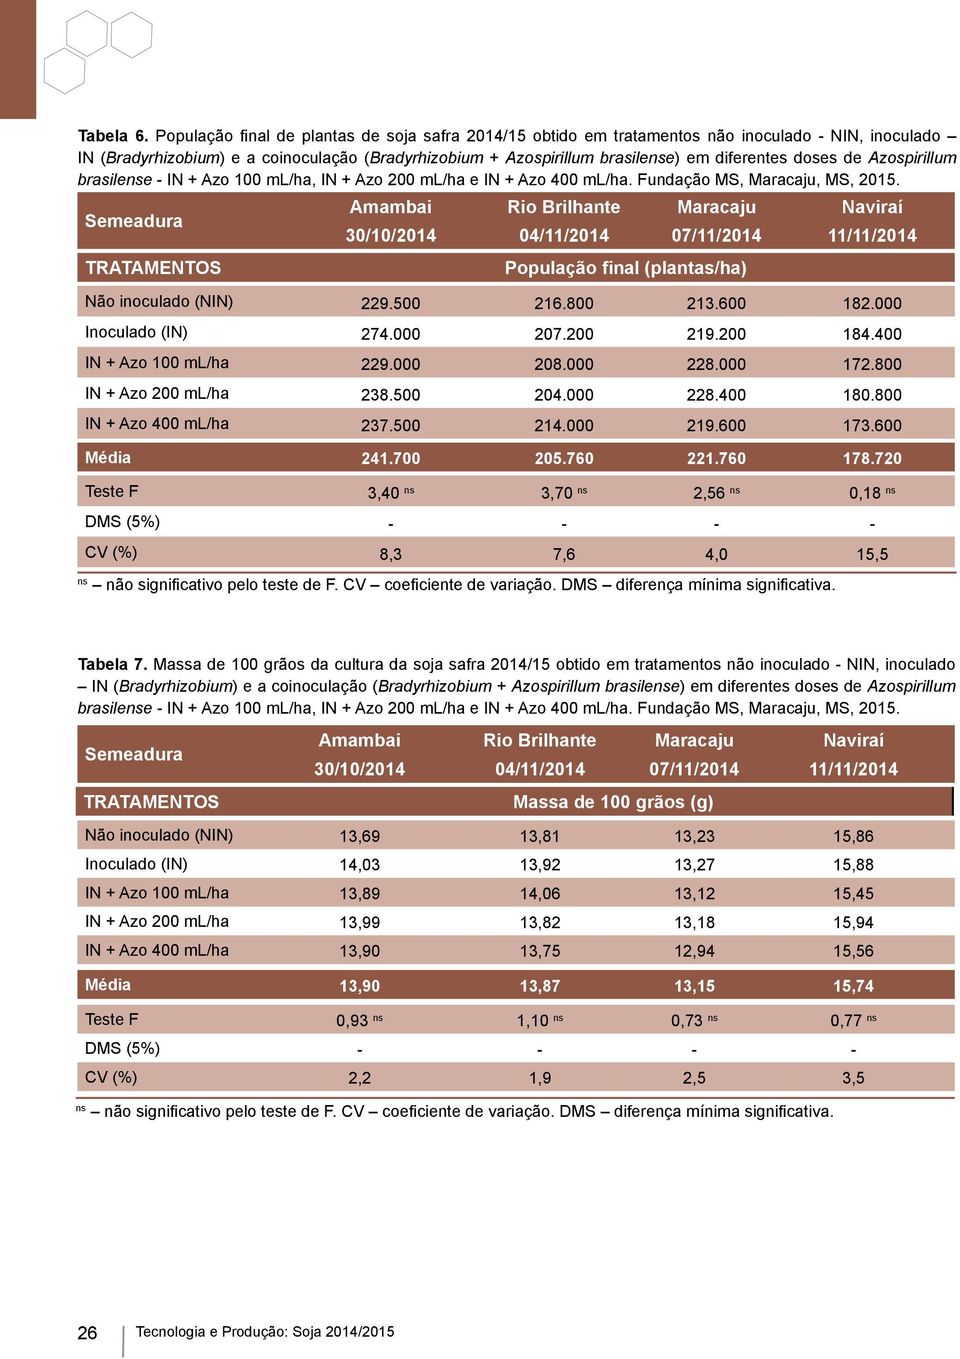 doses de Azospirillum brasilense - IN + Azo 100 ml/ha, IN + Azo 200 ml/ha e IN + Azo 400 ml/ha. Fundação MS, Maracaju, MS, 2015.